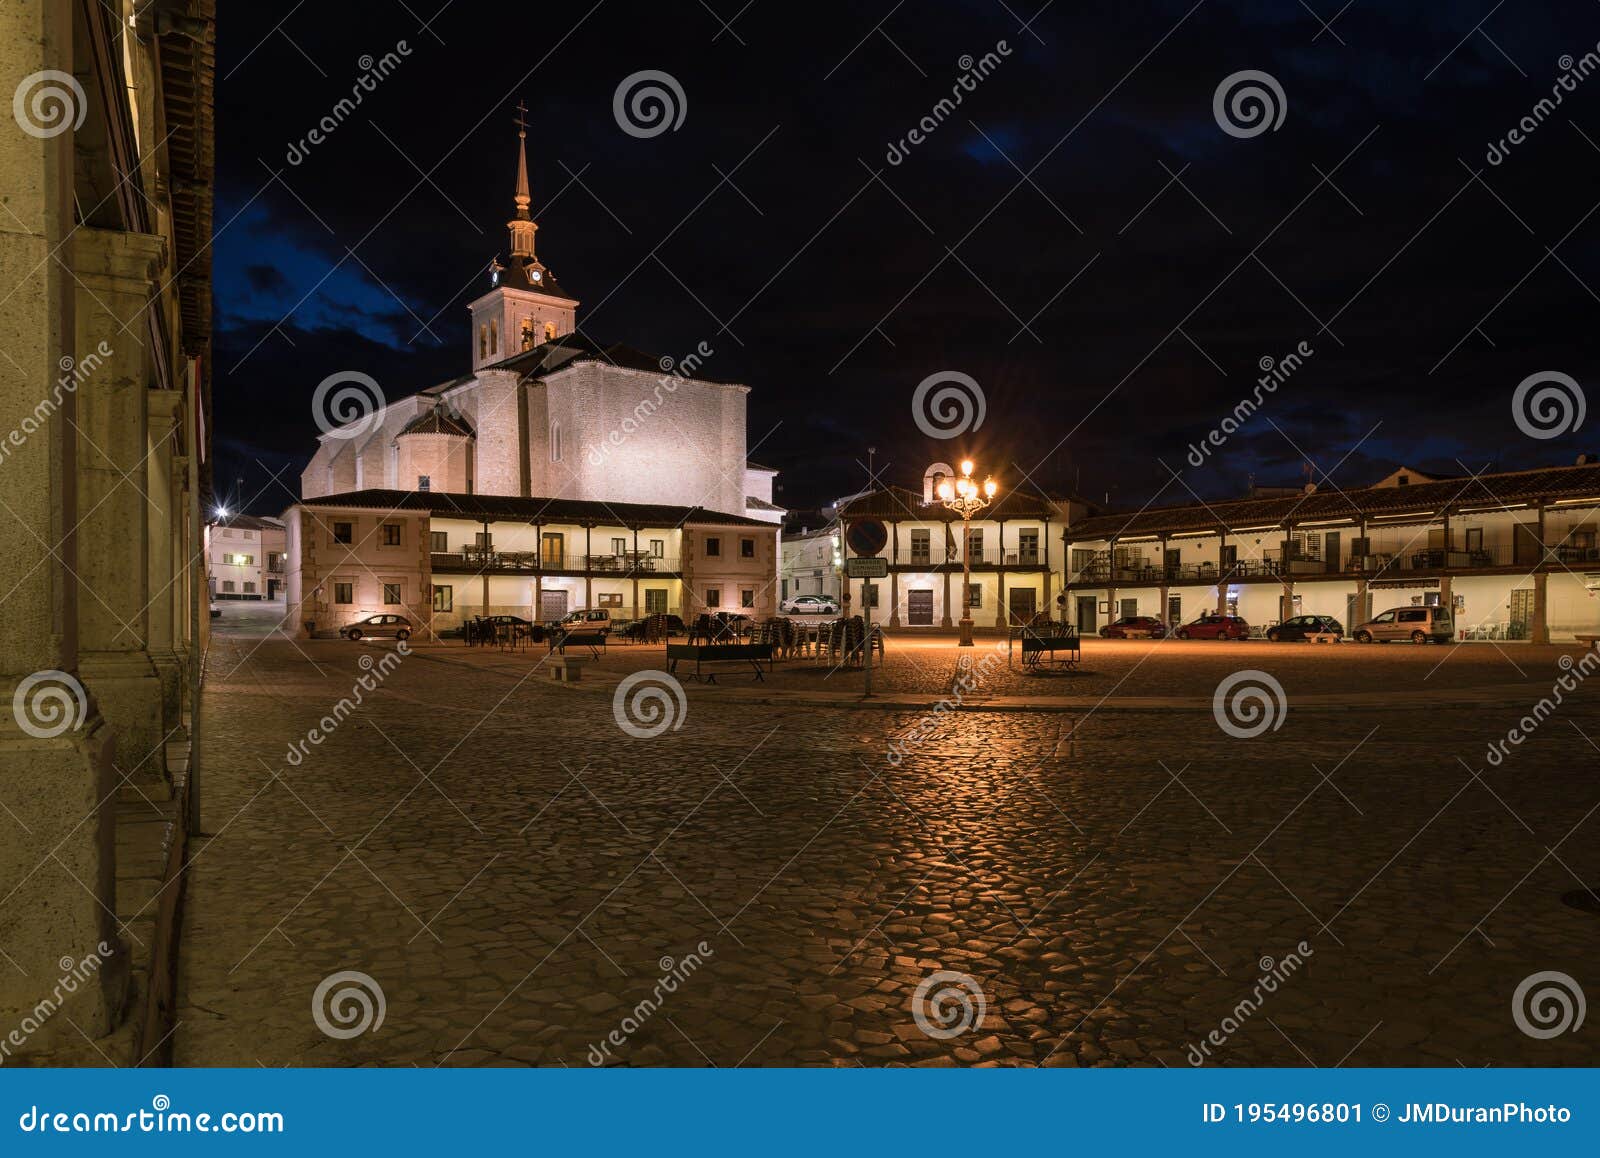 colmenar de oreja city landscape with the arcaded square illuminated at night, spain